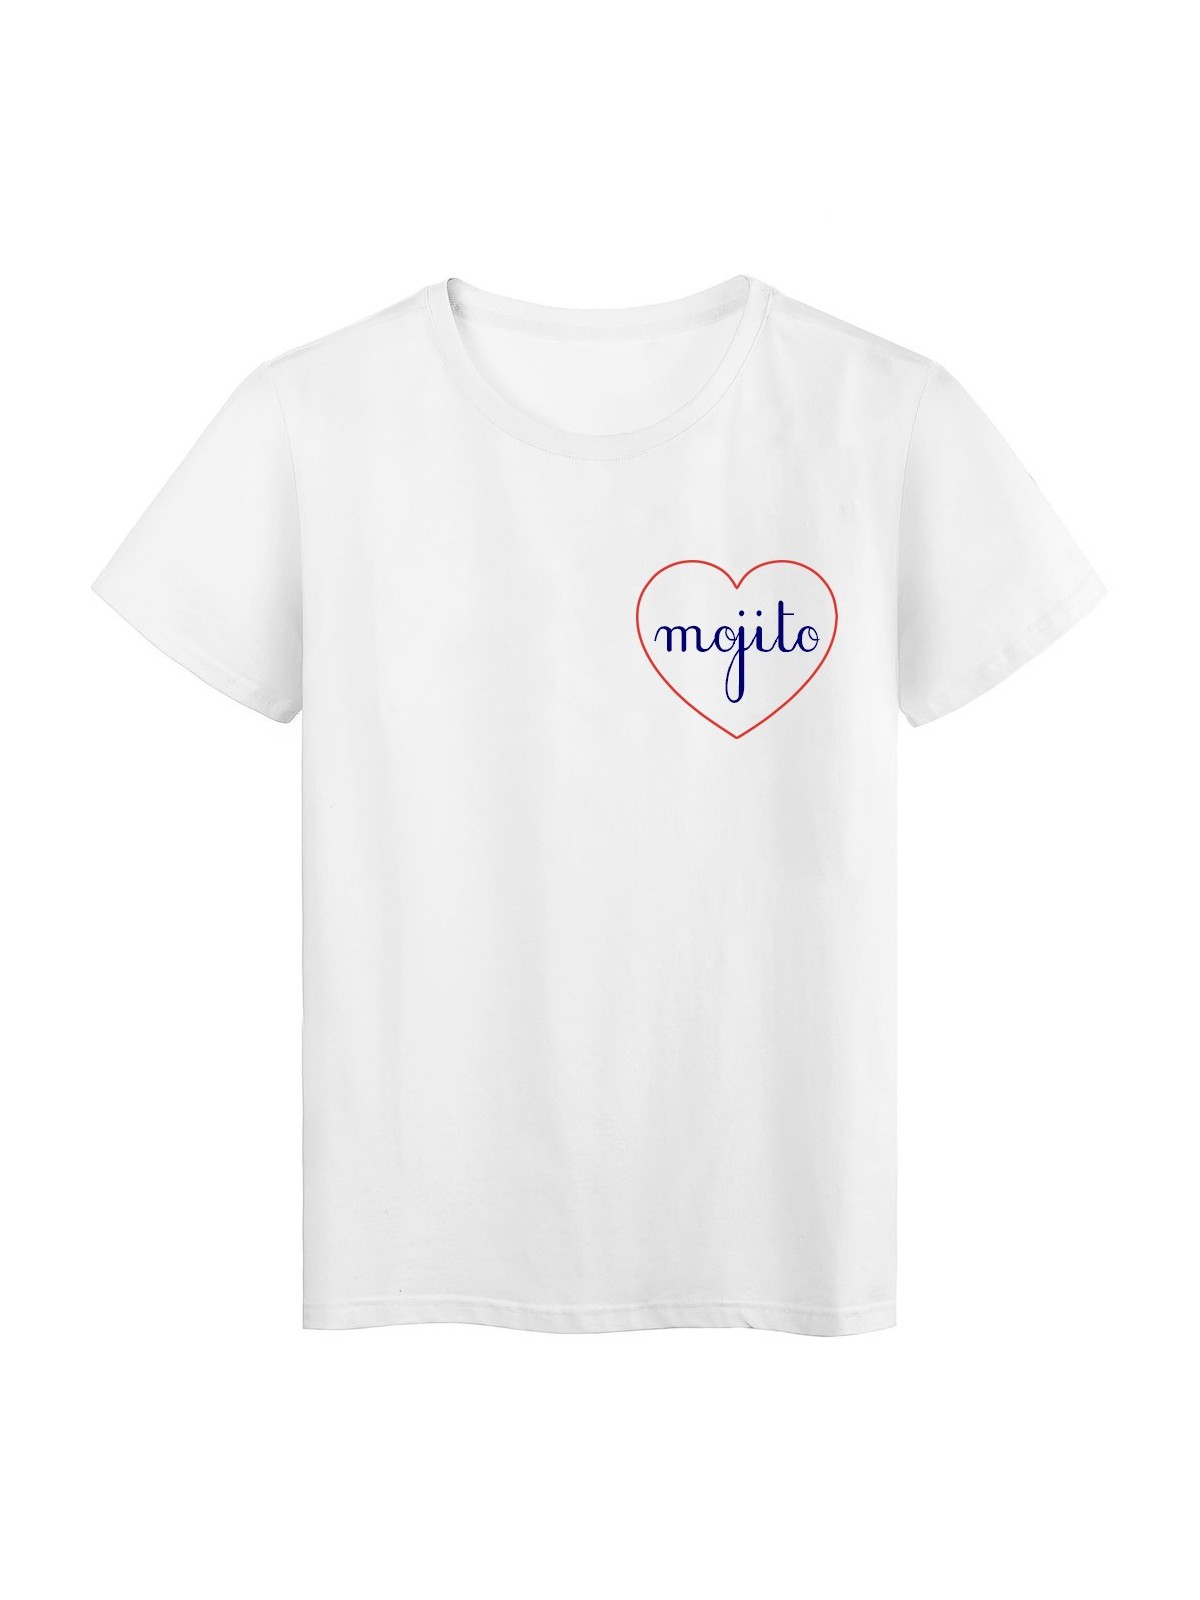 T-Shirt sÃ©rie limitÃ©e qualitÃ© supÃ©rieur Messages du coeur mojito